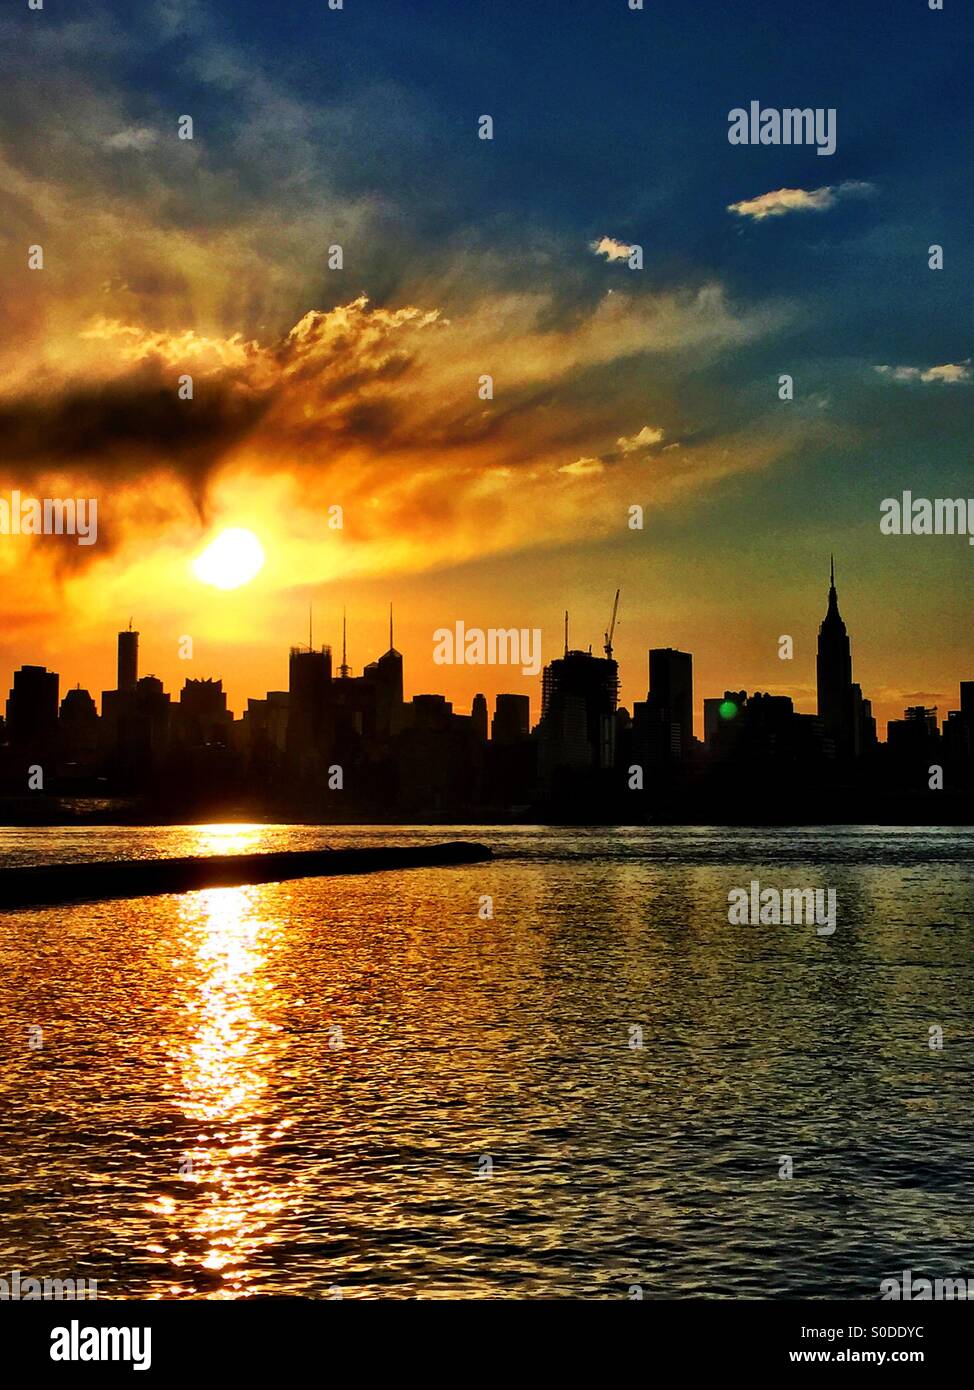 Sunrise on the Hudson River, New York City. iPhone photo. Stock Photo